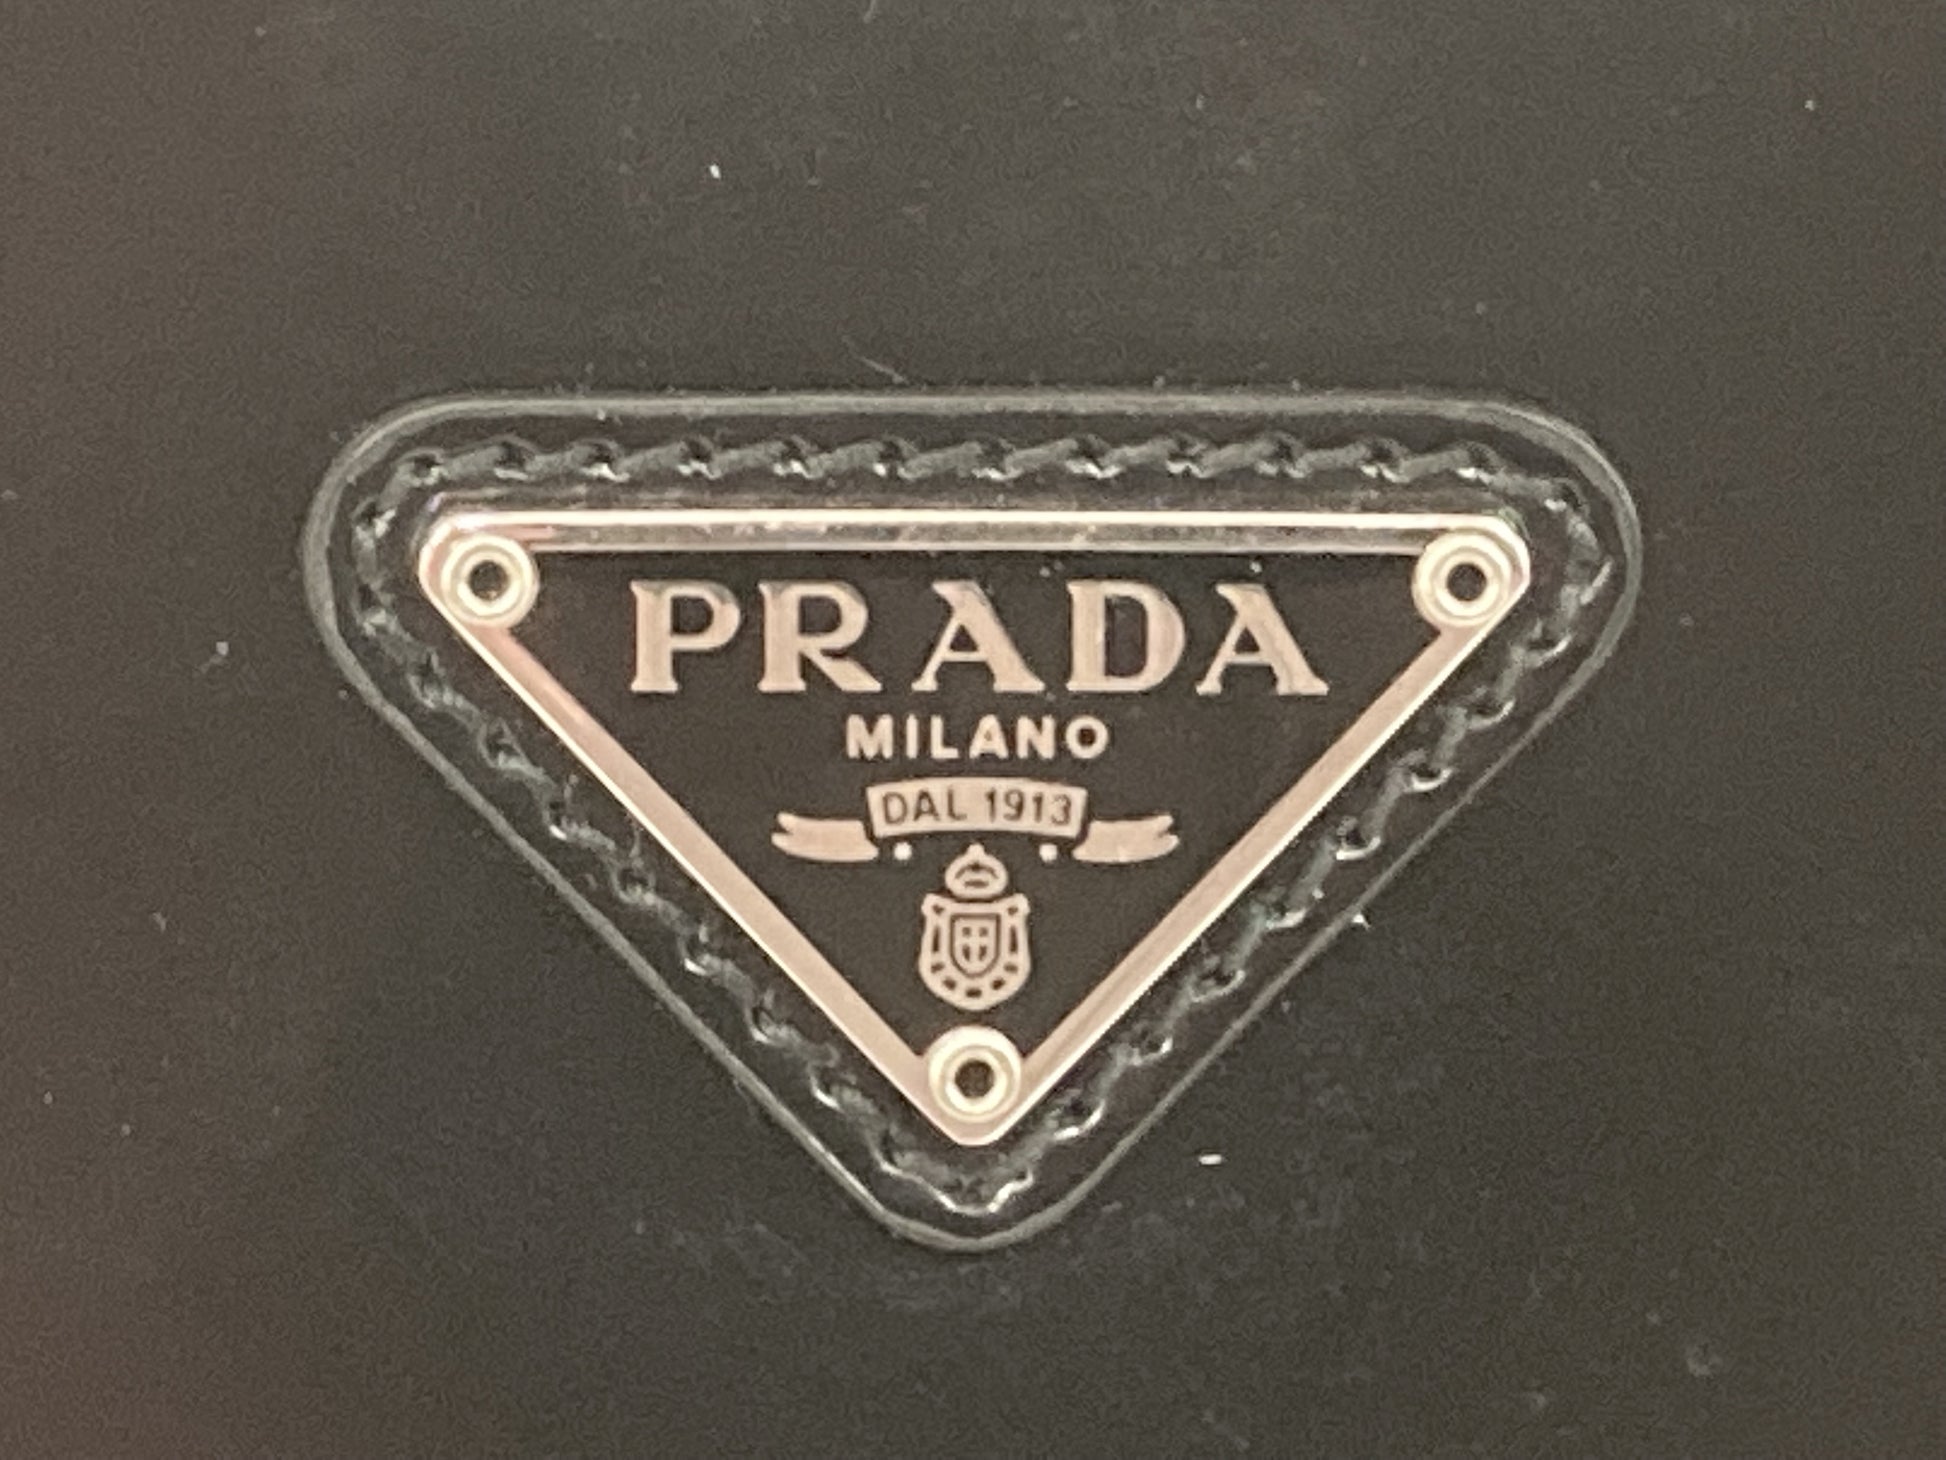 Buy Prada Mini Brushed-Leather Bucket Bag 'Black' - 1BE059 ZO6 F0002